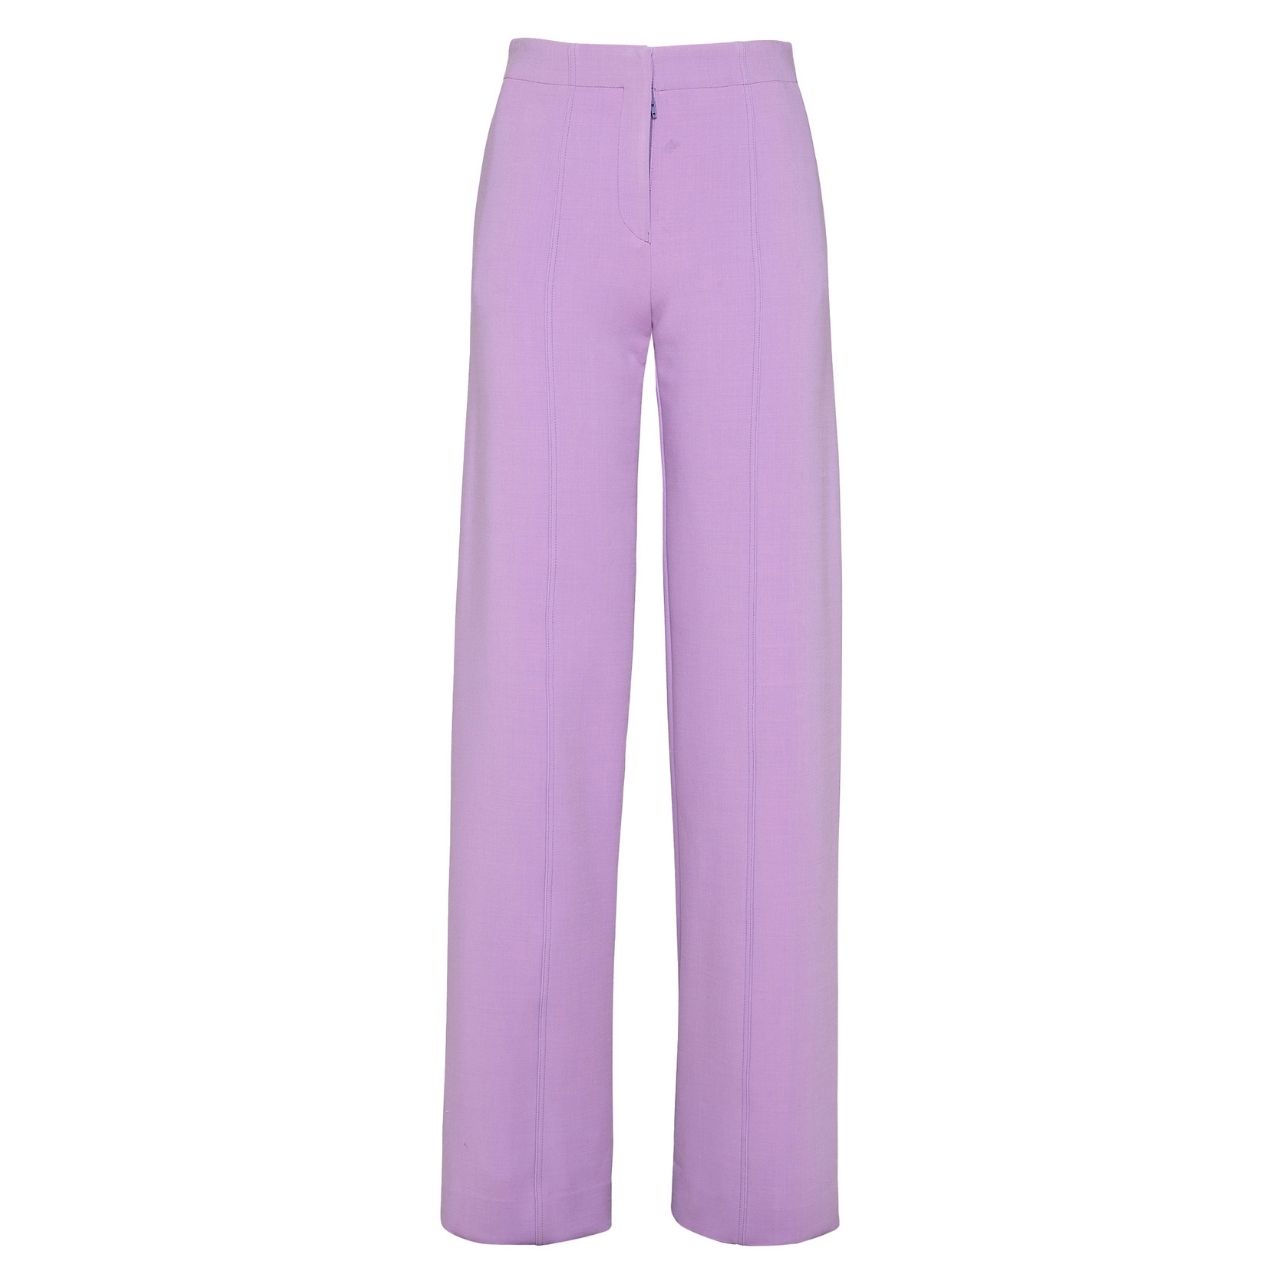 Salvatore Ferragamo high-waisted purple trousers